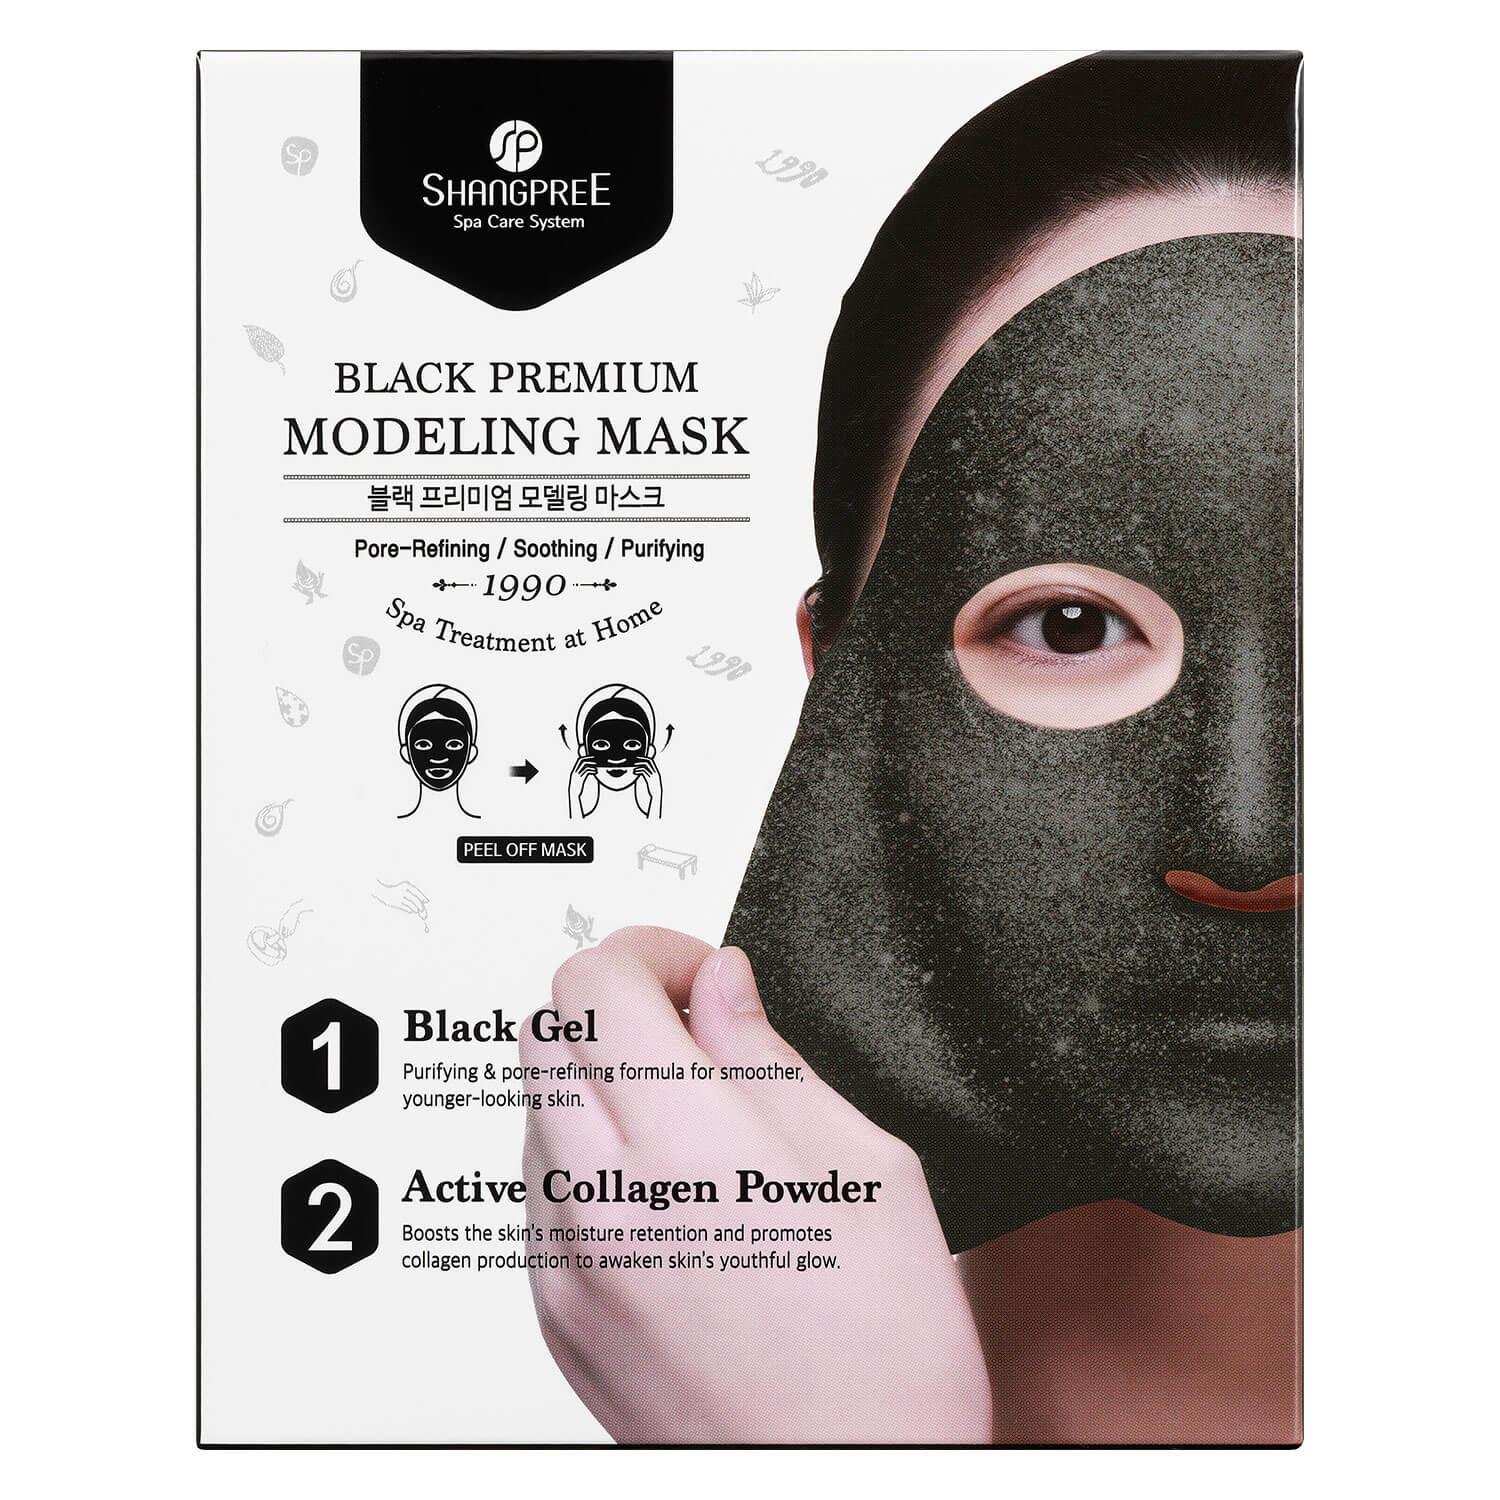 SHANGPREE - Black Premium Modeling Mask